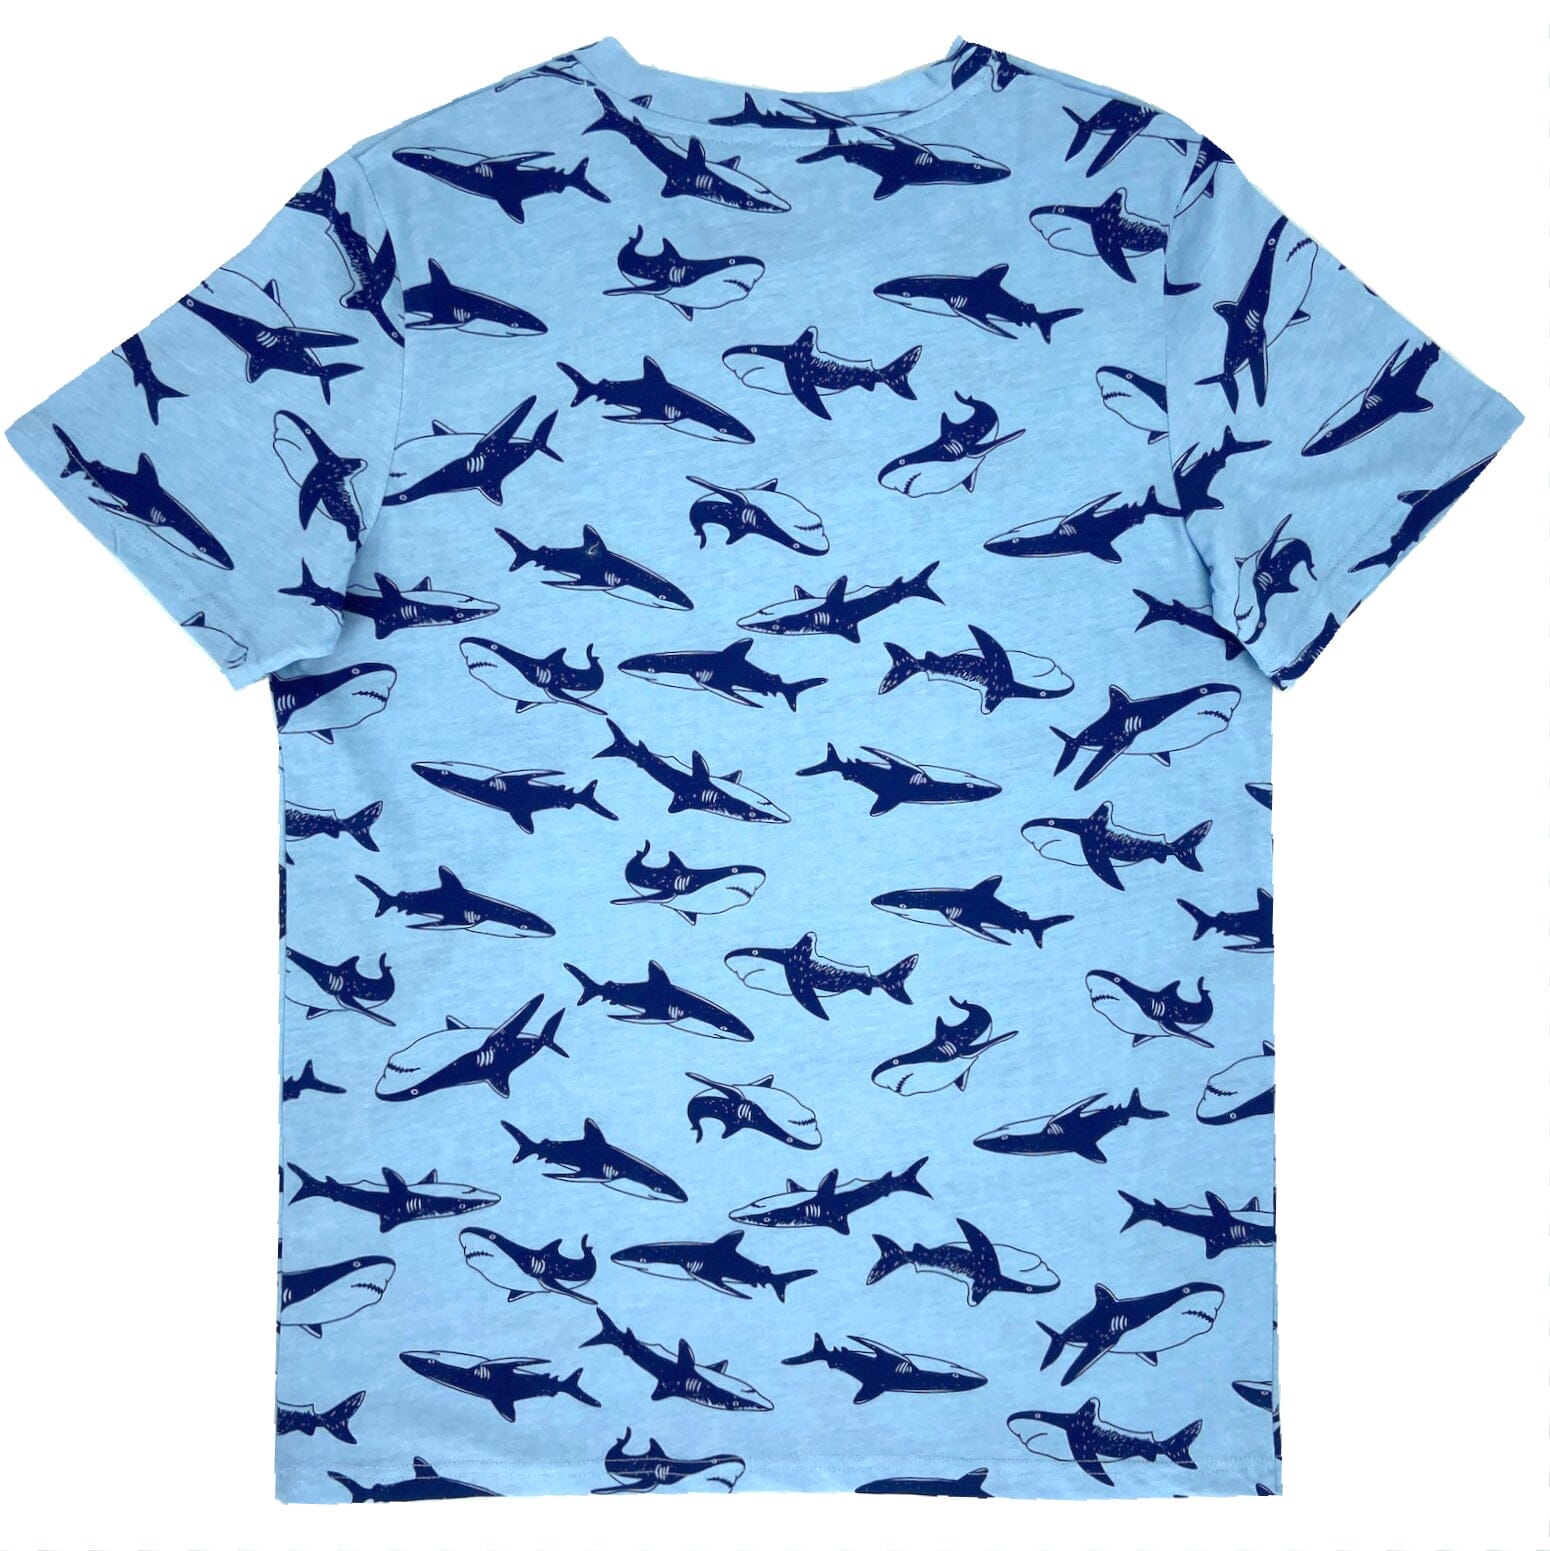 Men's Super Soft Blue Great White Shark Novelty Print Cotton T-Shirt